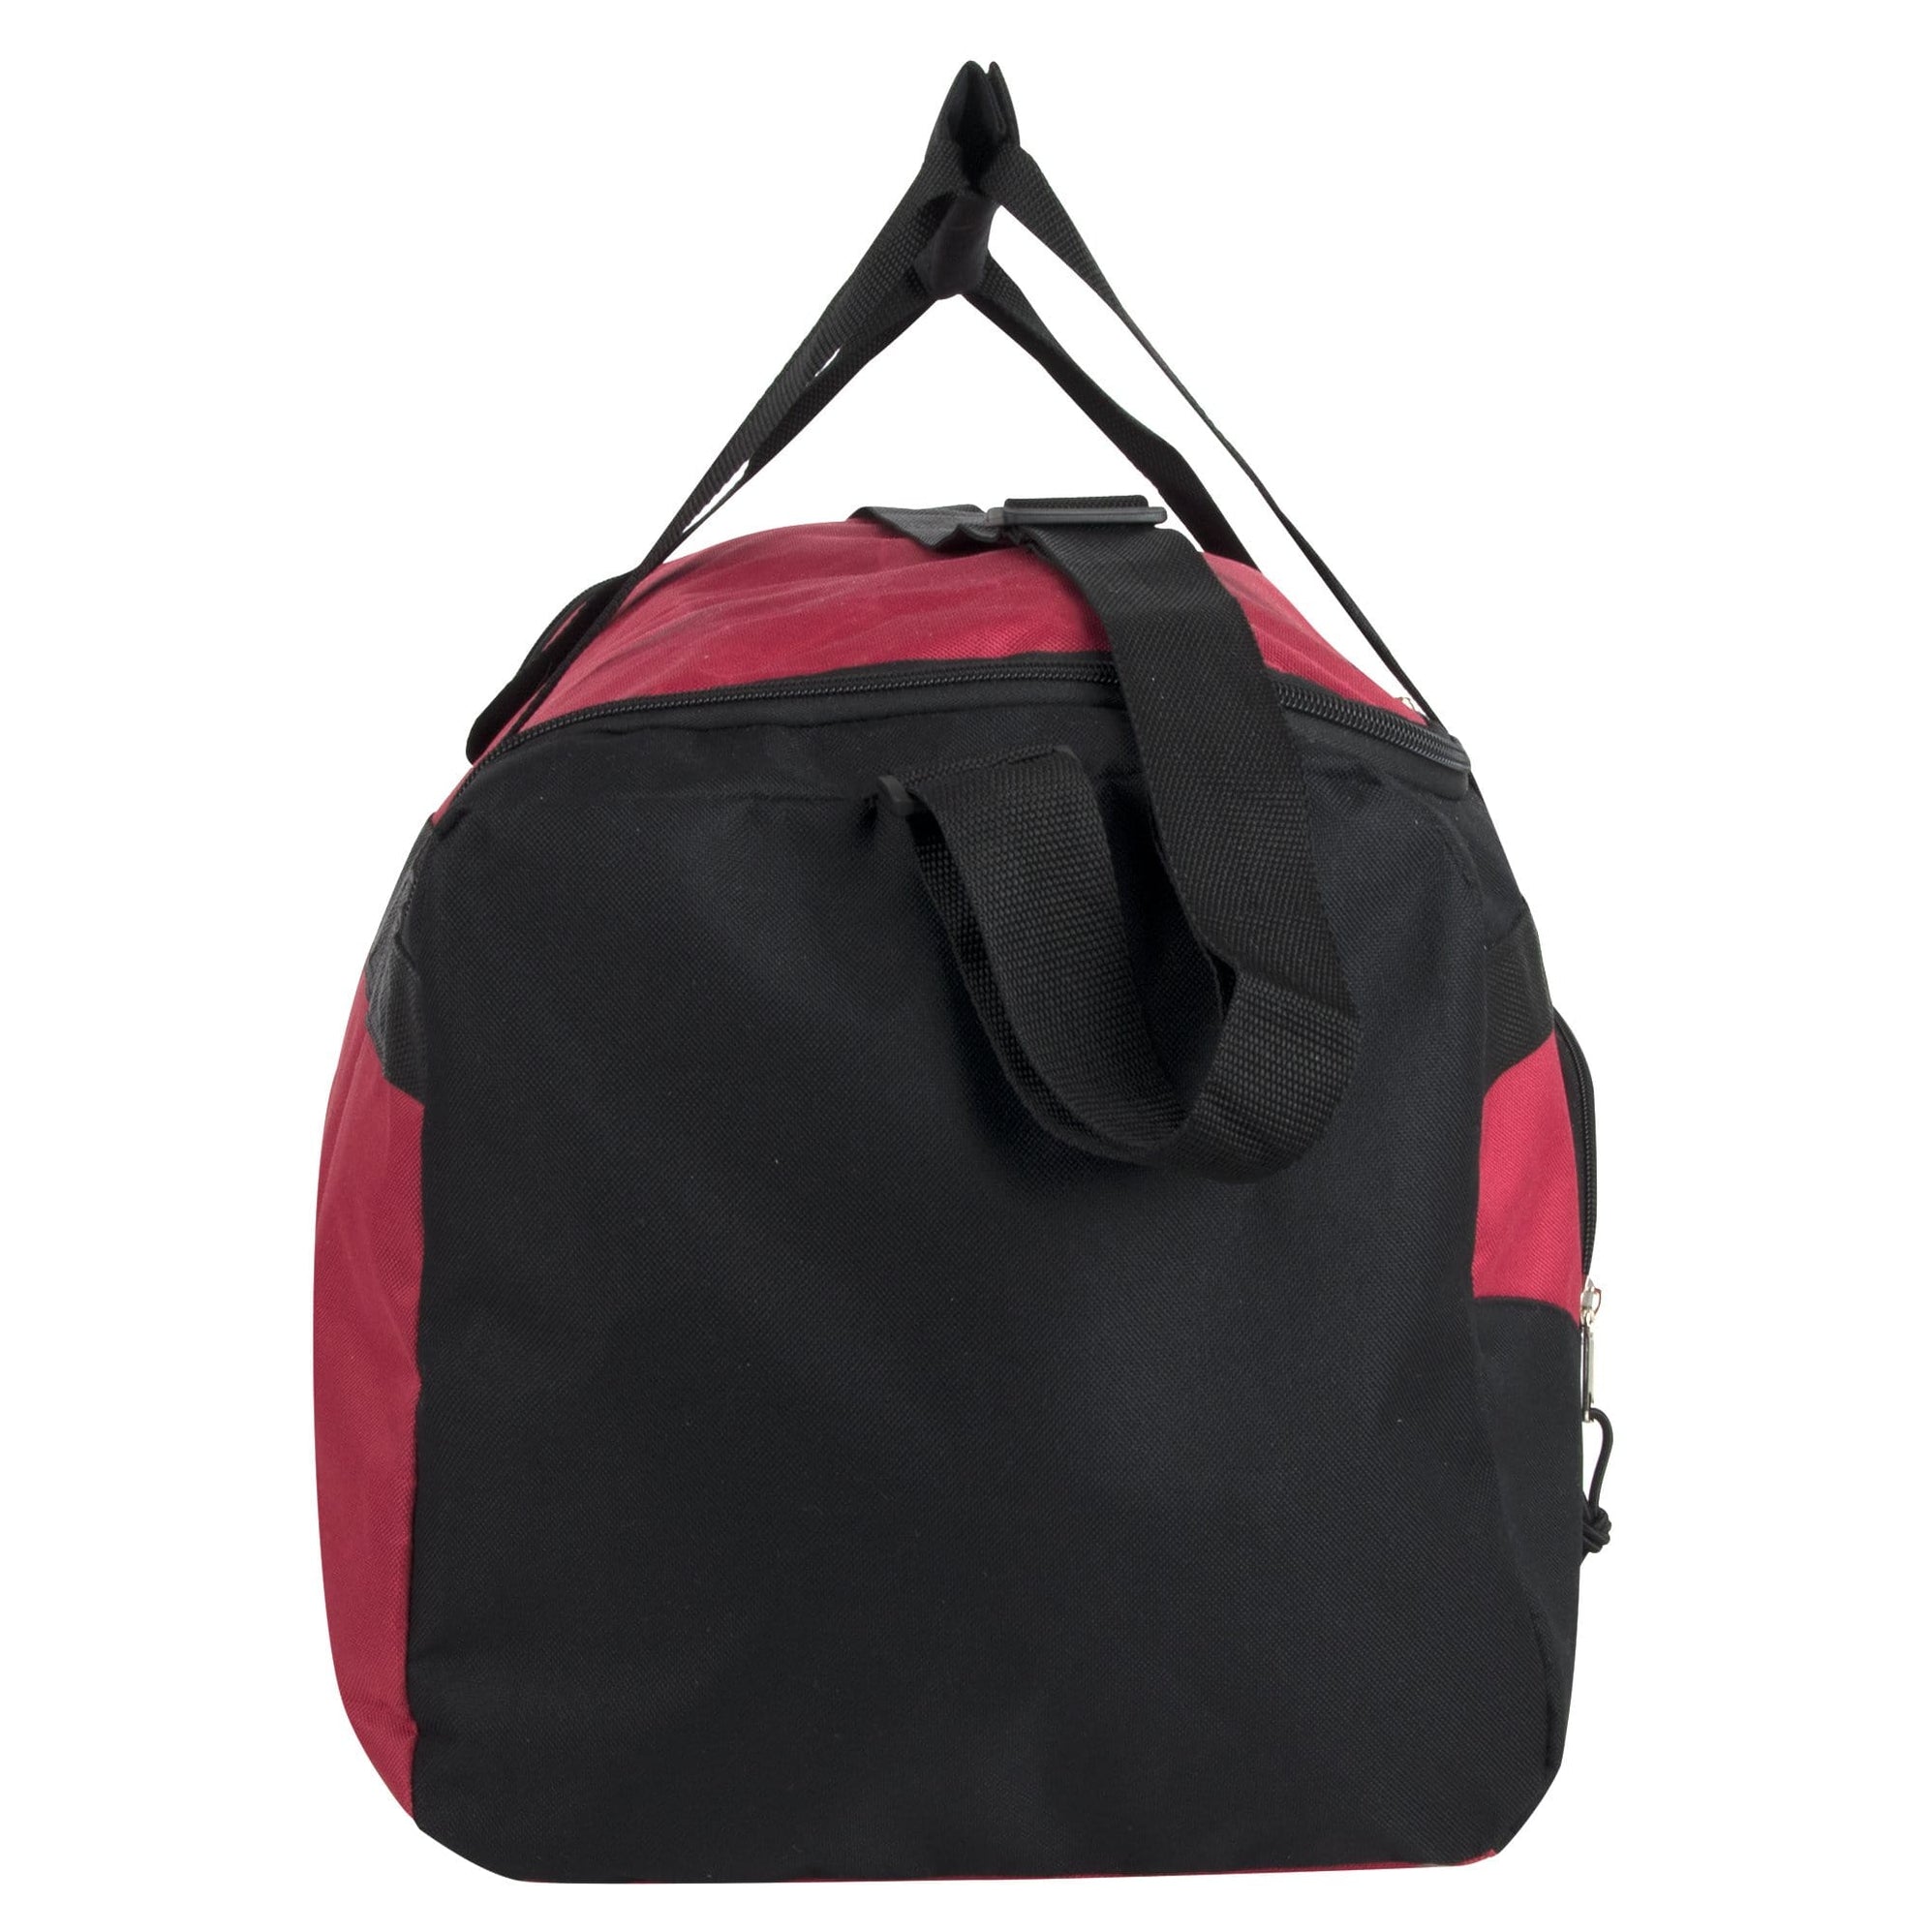 Cheap Wholesale Duffle Bags: Trailmaker 22